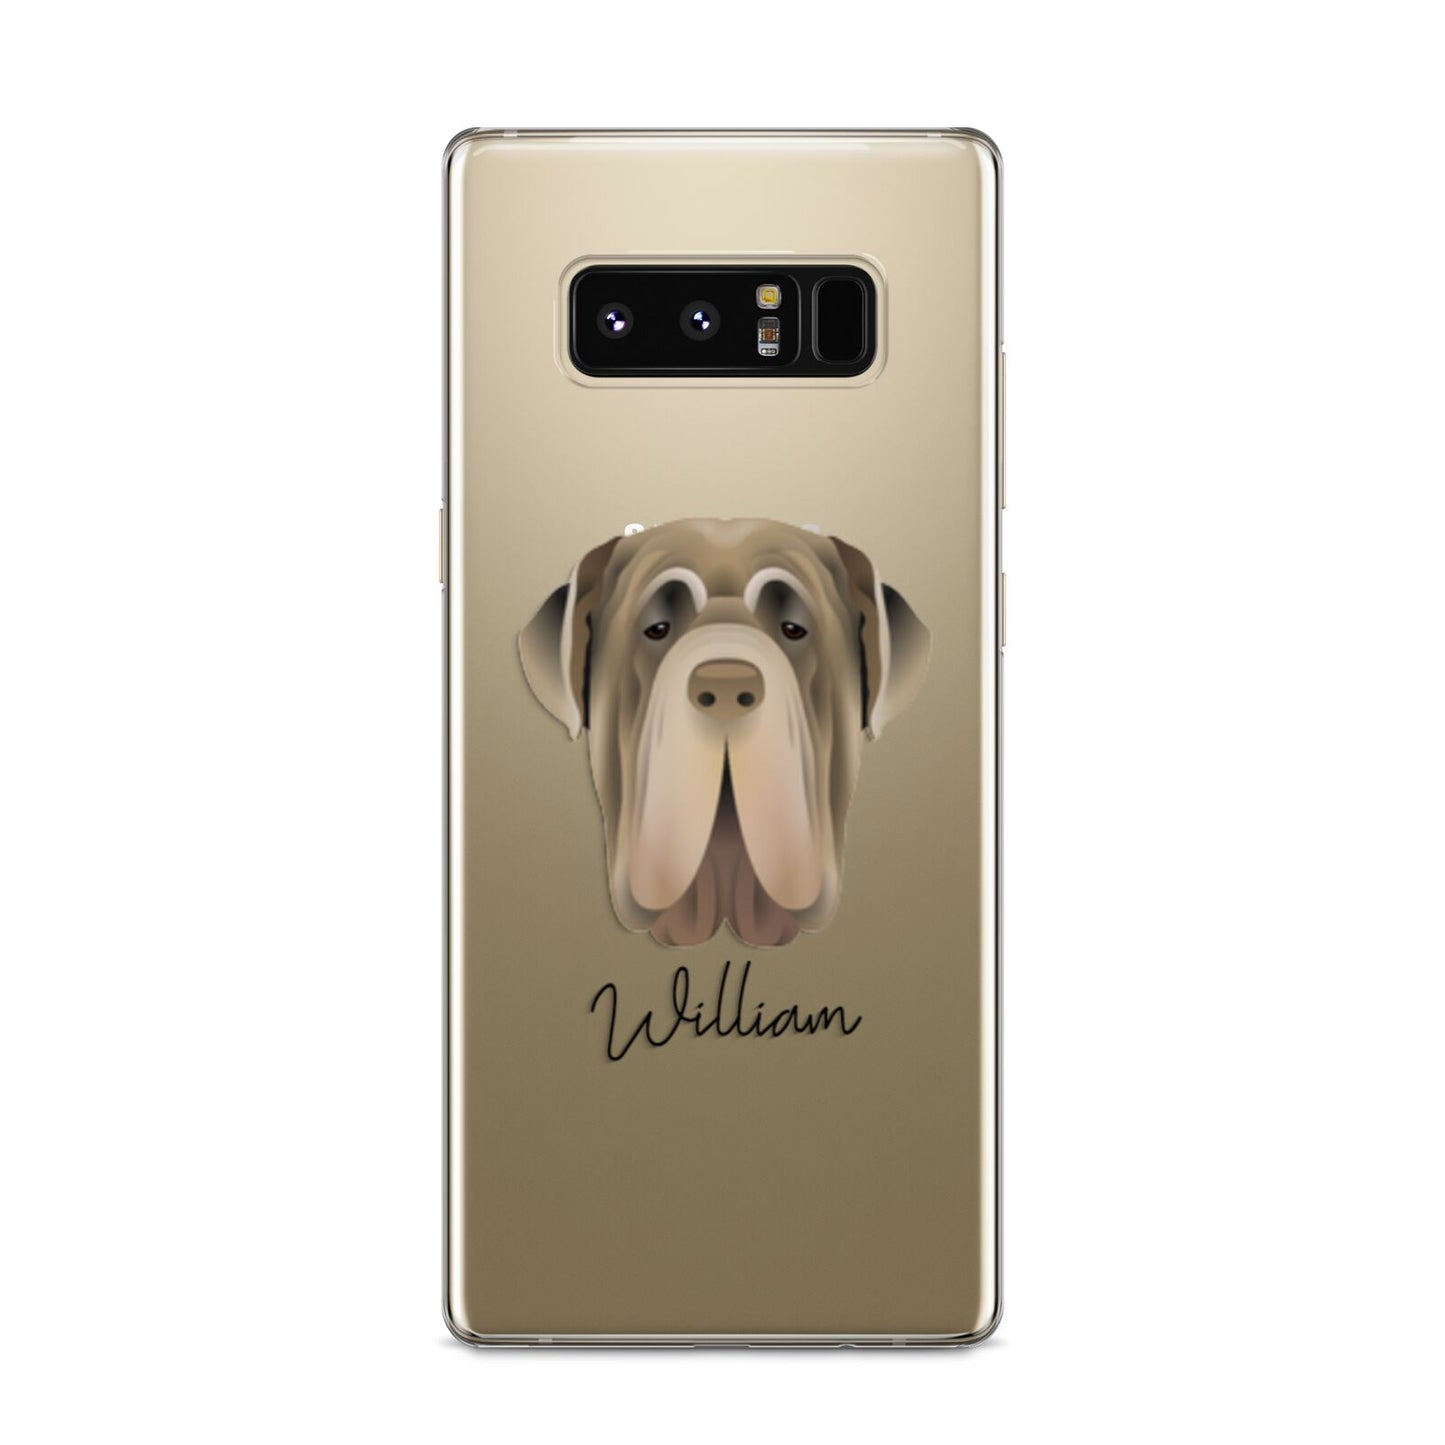 Neapolitan Mastiff Personalised Samsung Galaxy S8 Case